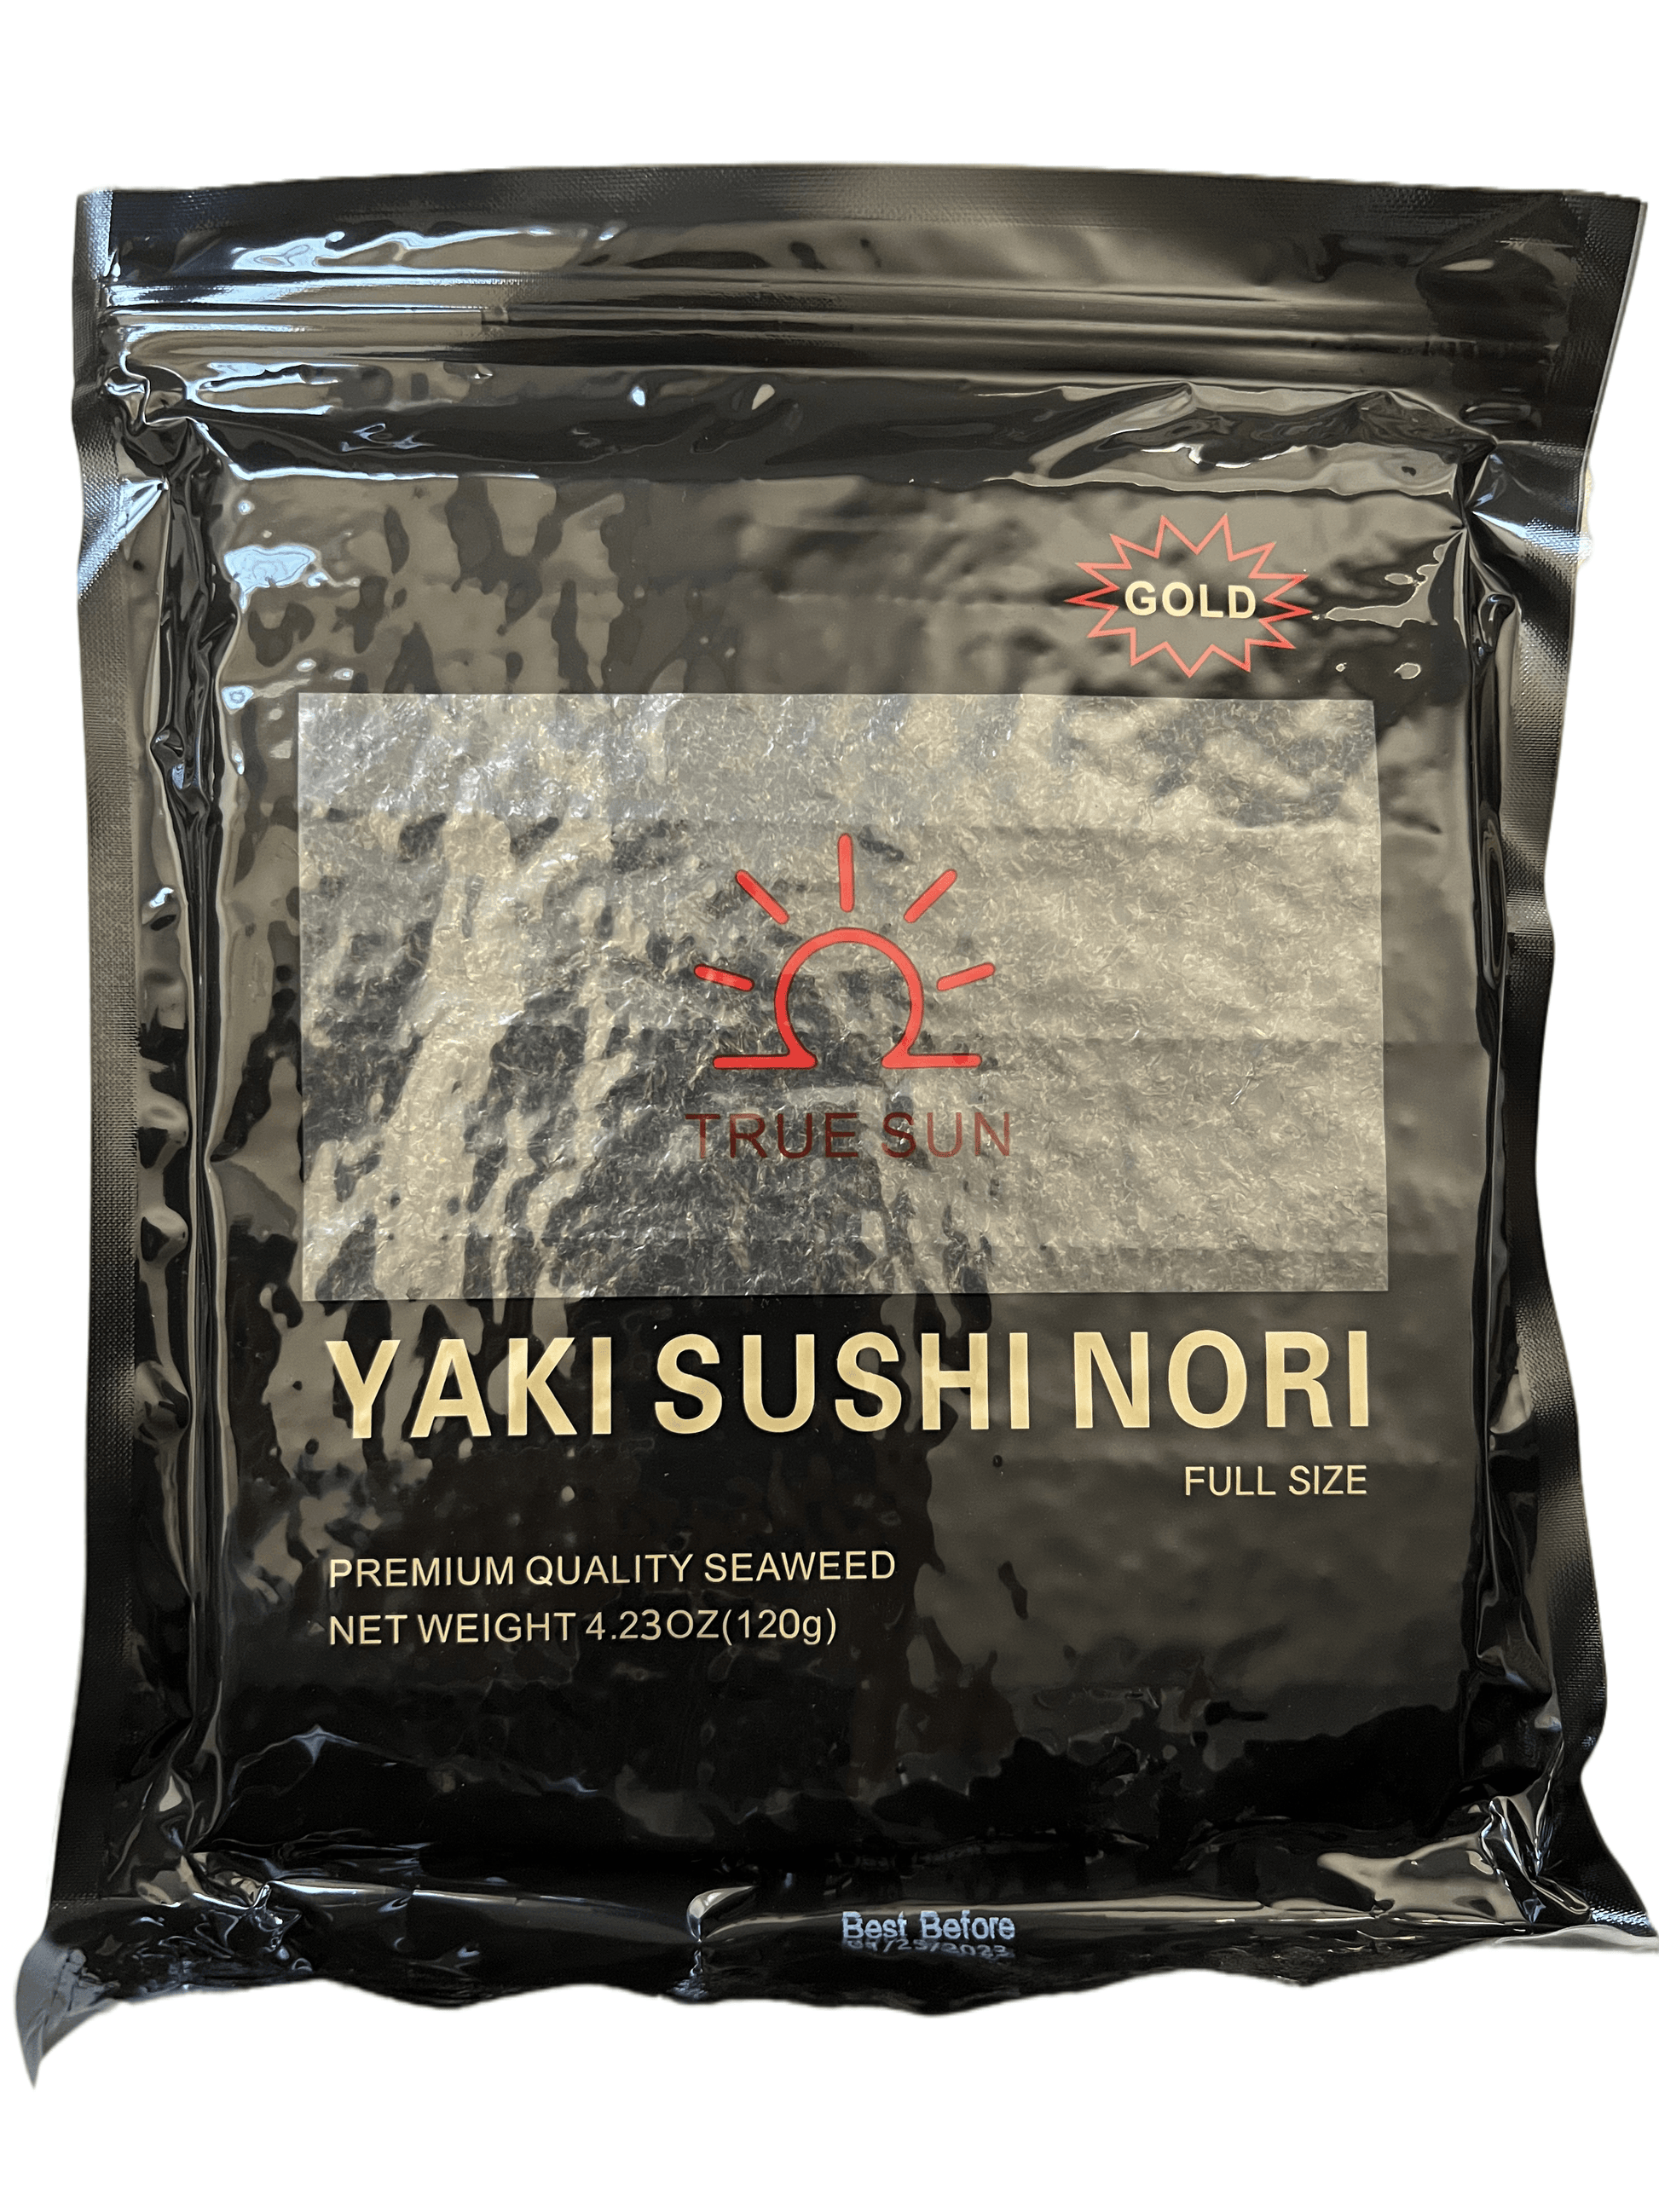 True Sun Sushi Nori Special Black Gold, Full Size 50 pieces/bag, 10 bags/box - True Sun